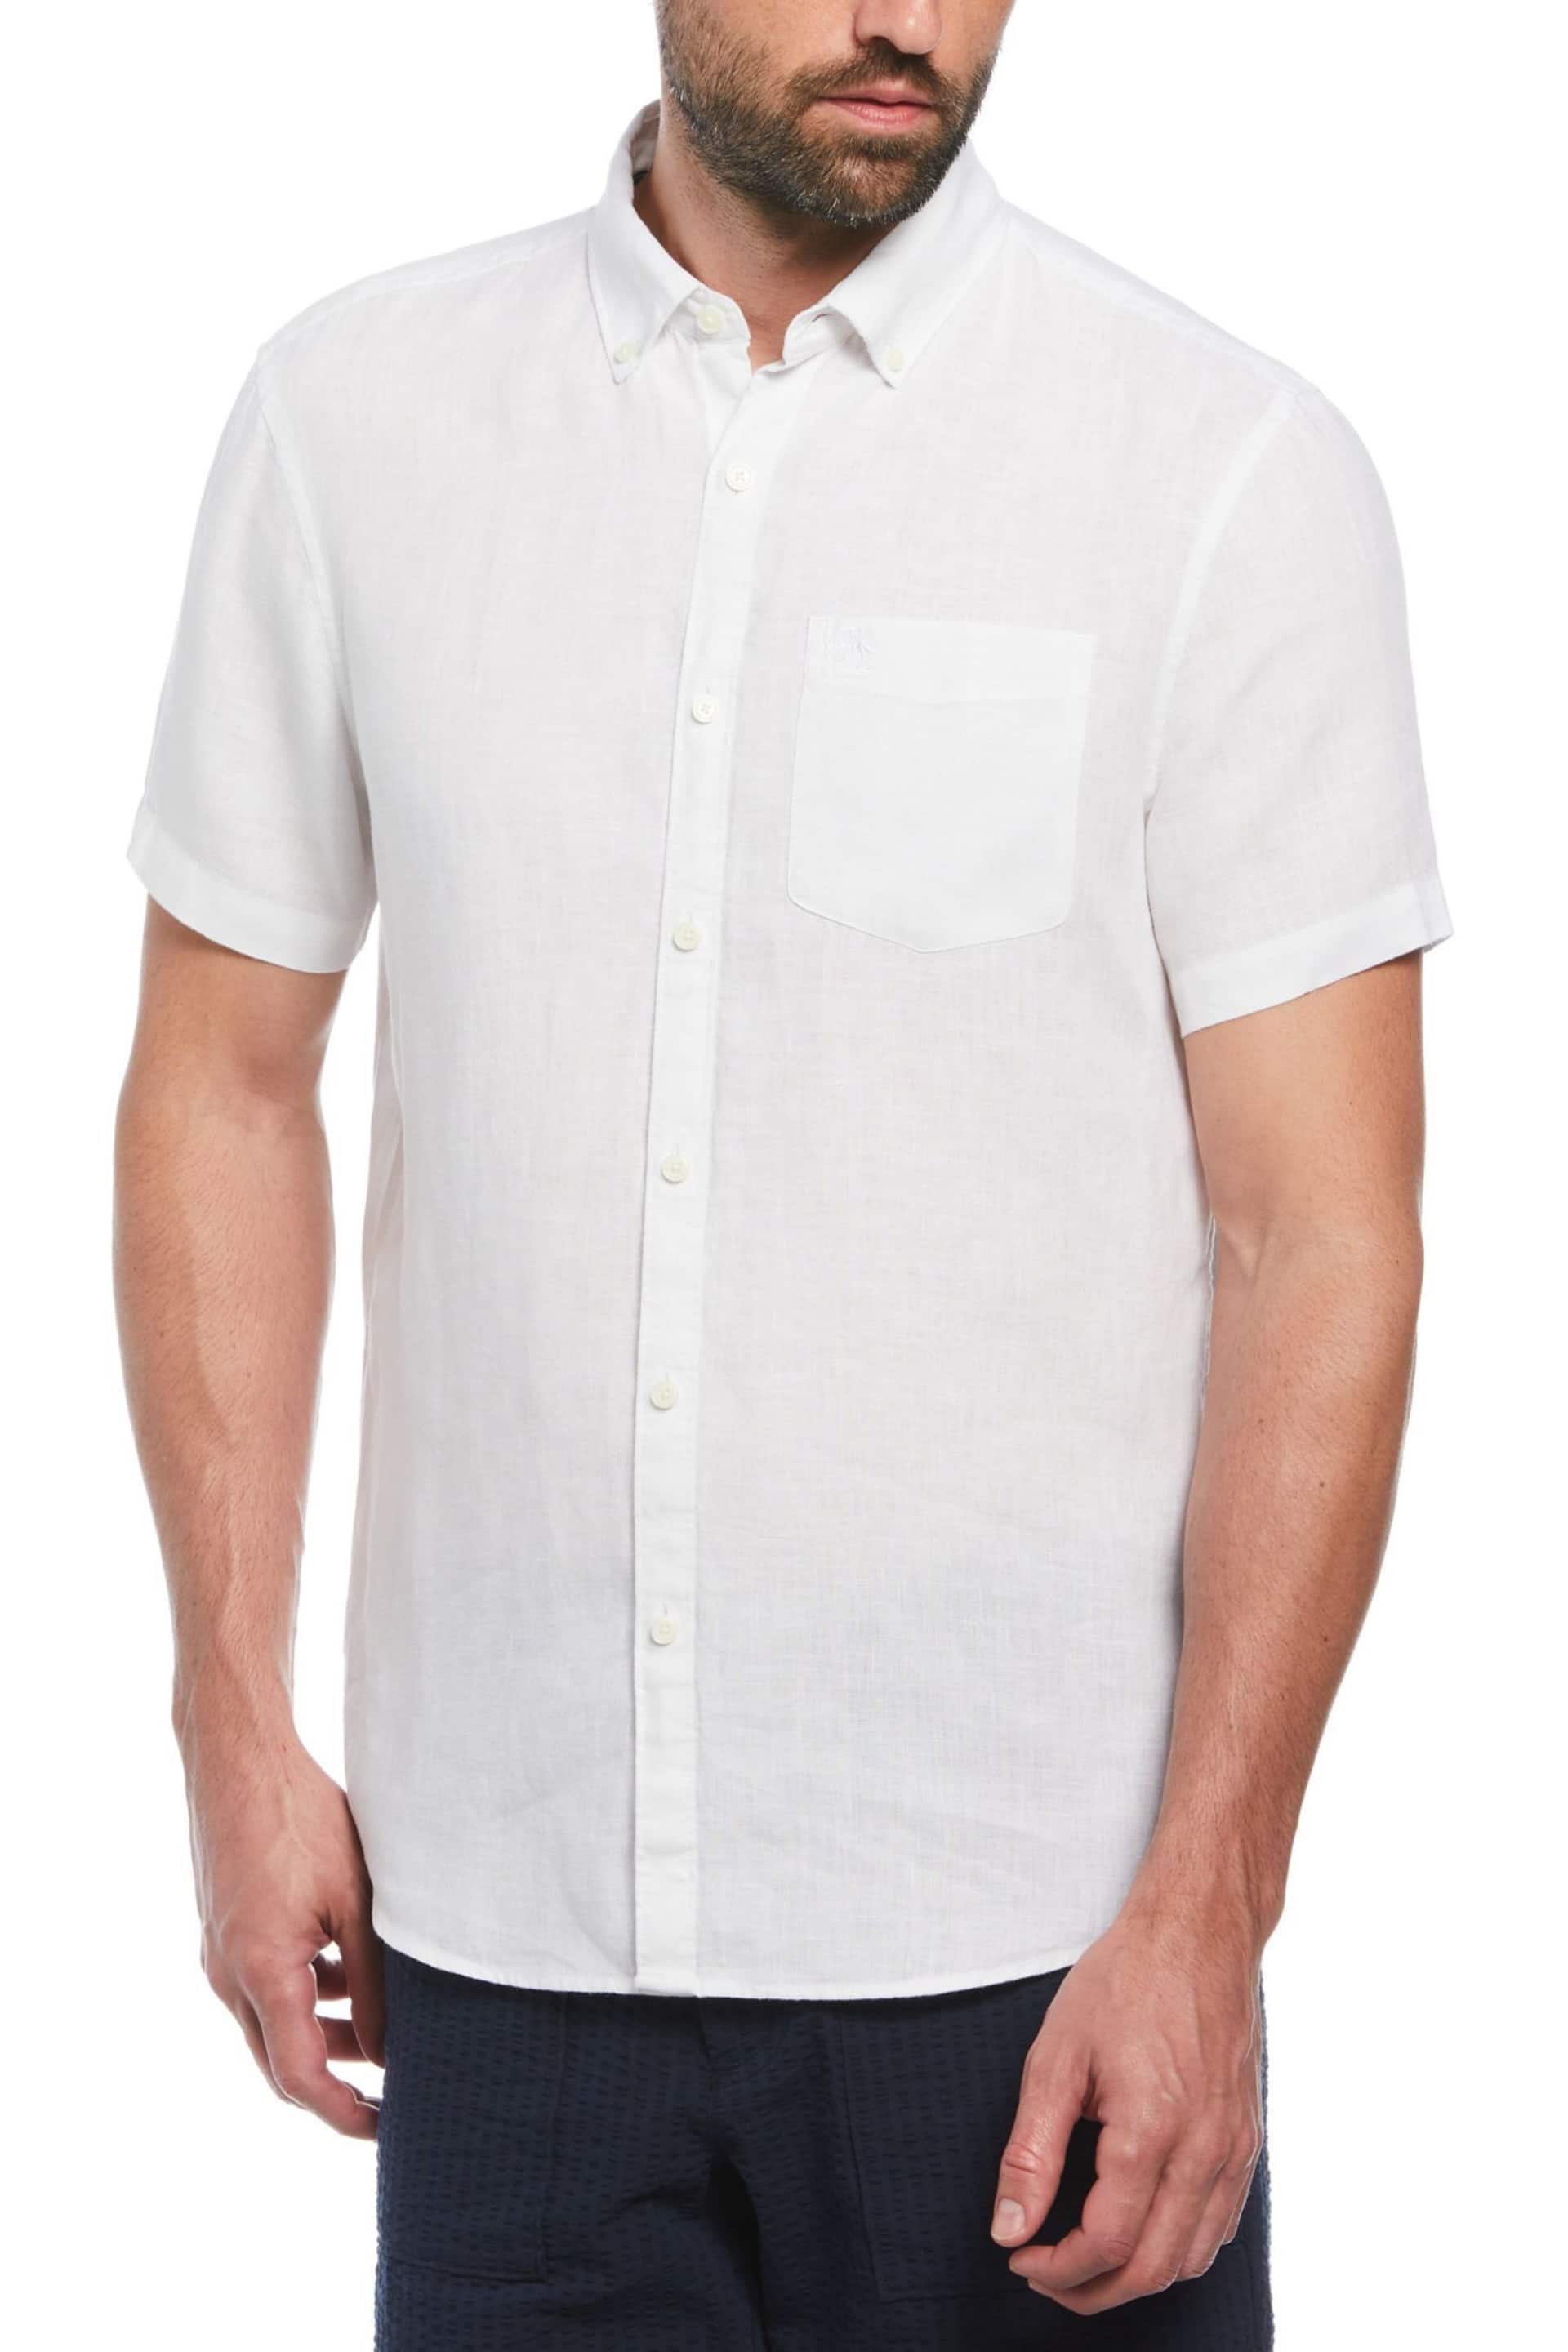 Original Penguin Delave Linen Pocket Short Sleeve White Shirt - Image 1 of 3